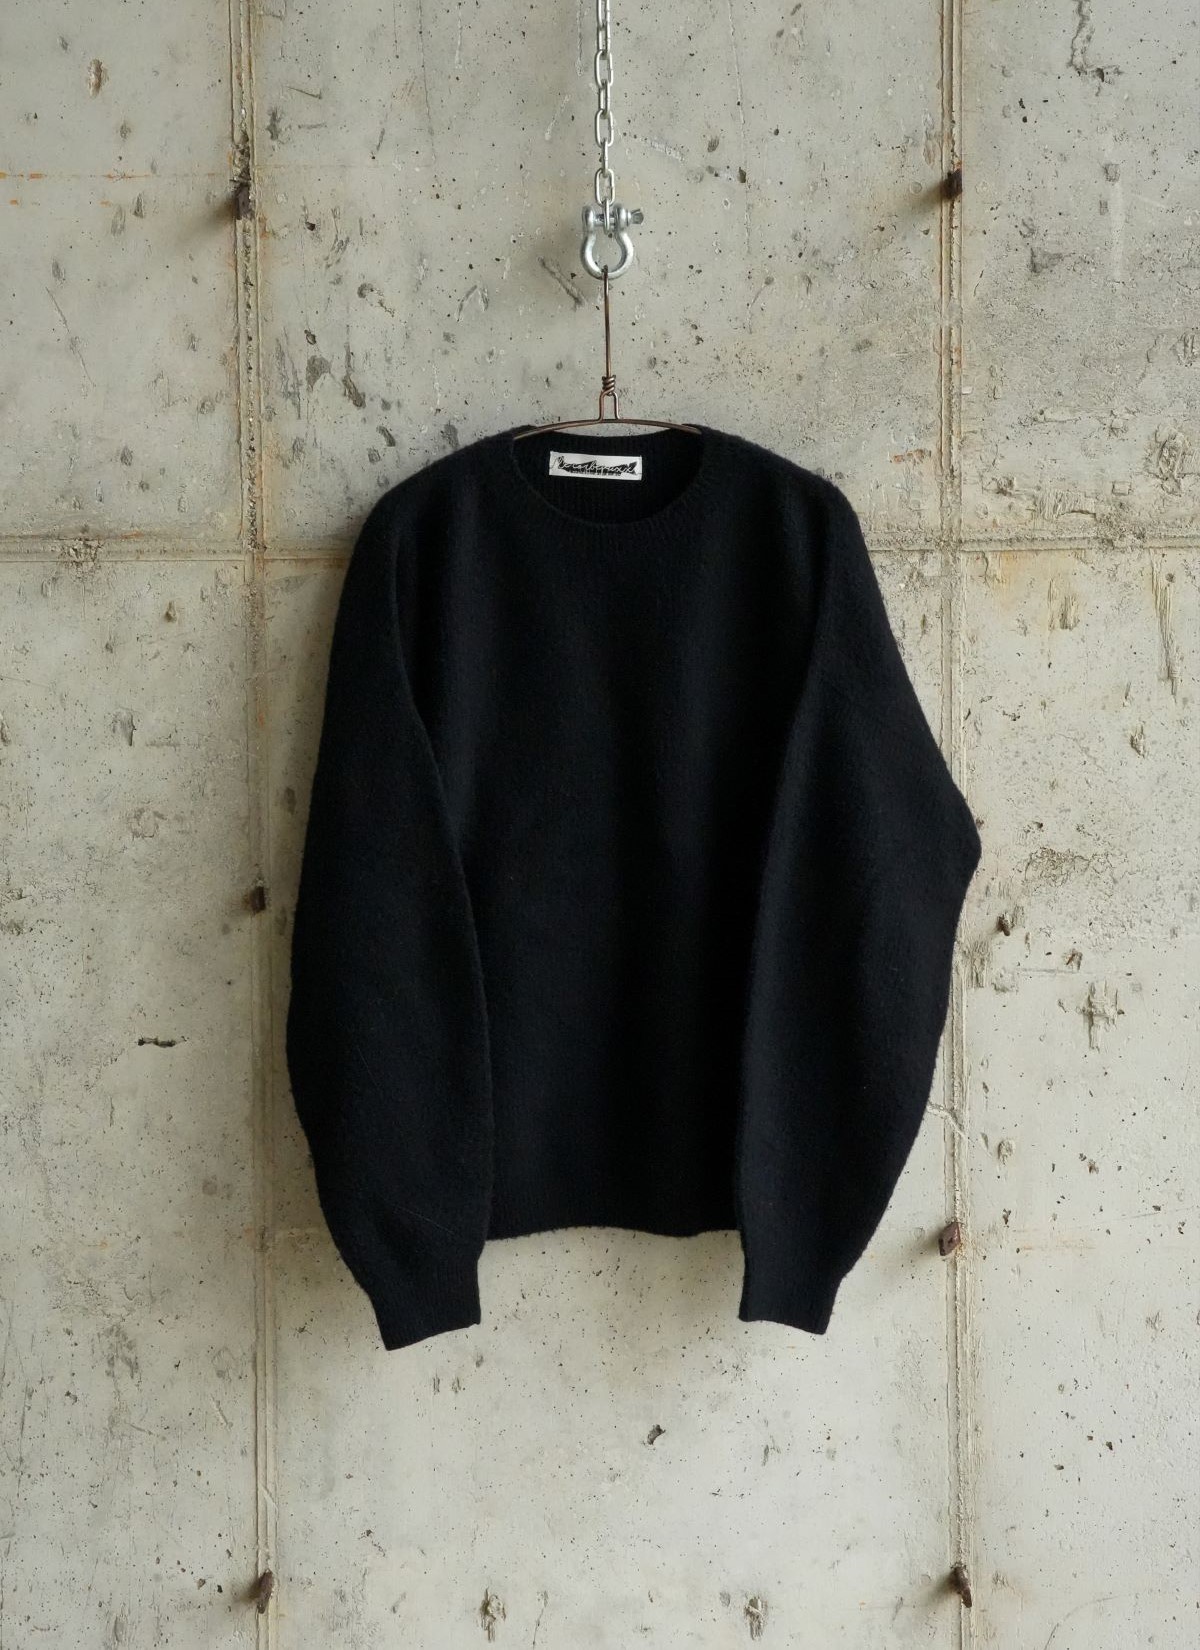 Brancusi sweater (3D knitting)